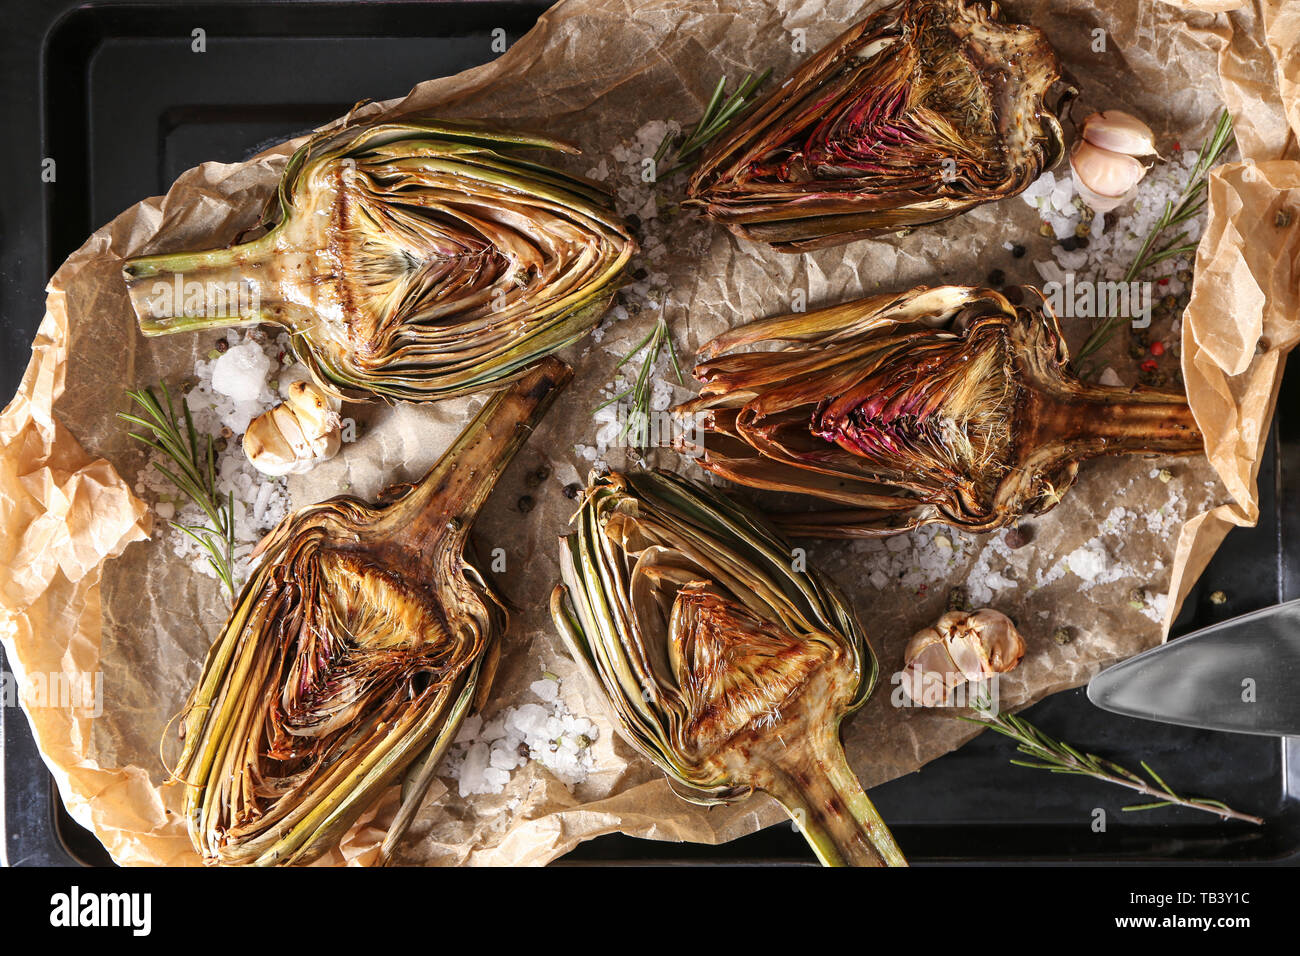 Tasty cooked artichokes on baking sheet Stock Photo